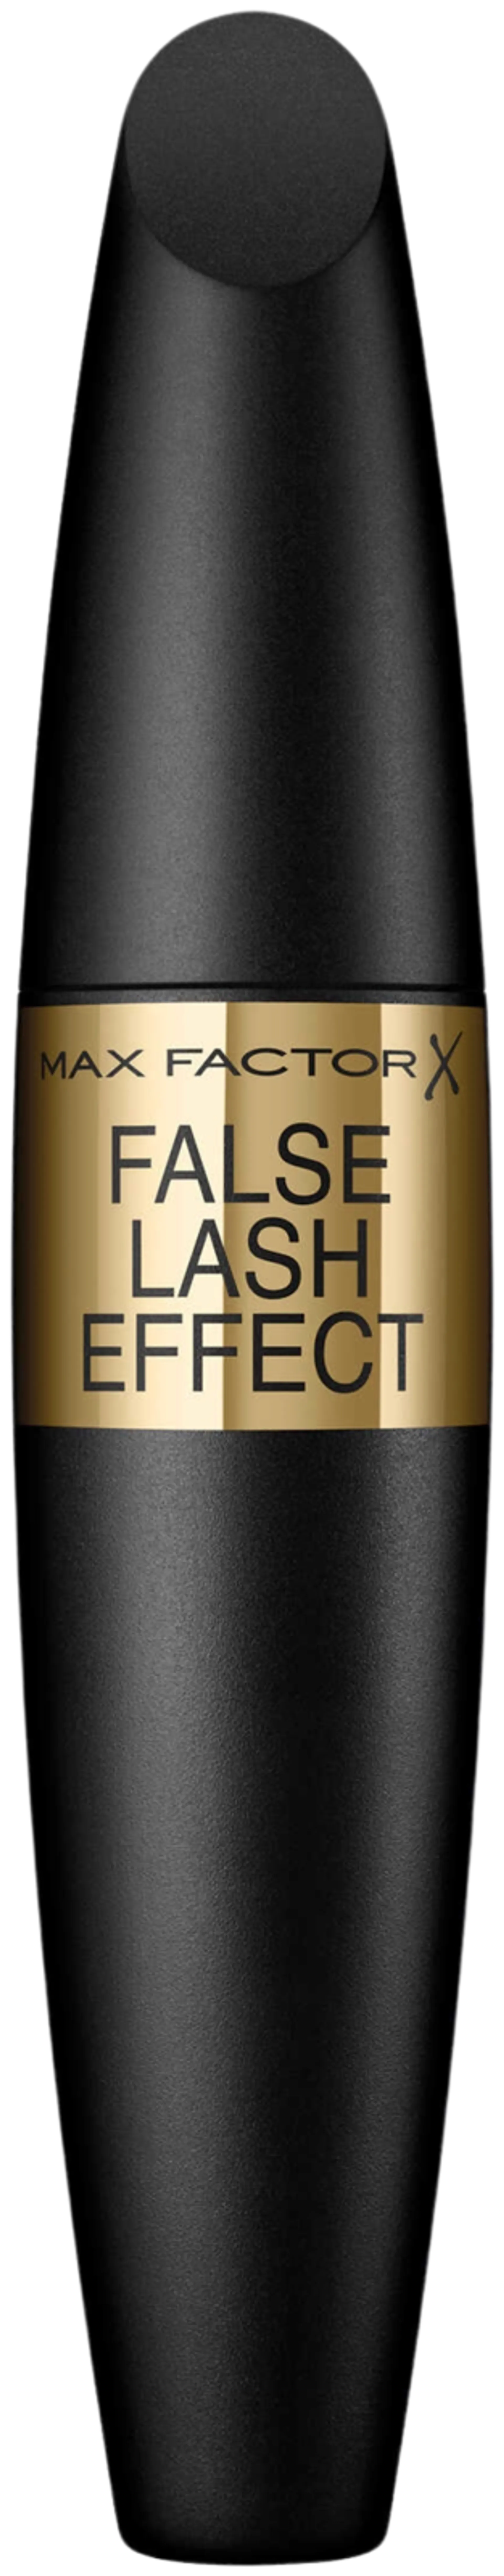 Max Factor False Lash Effect mascara Black 13,1 ml - 2